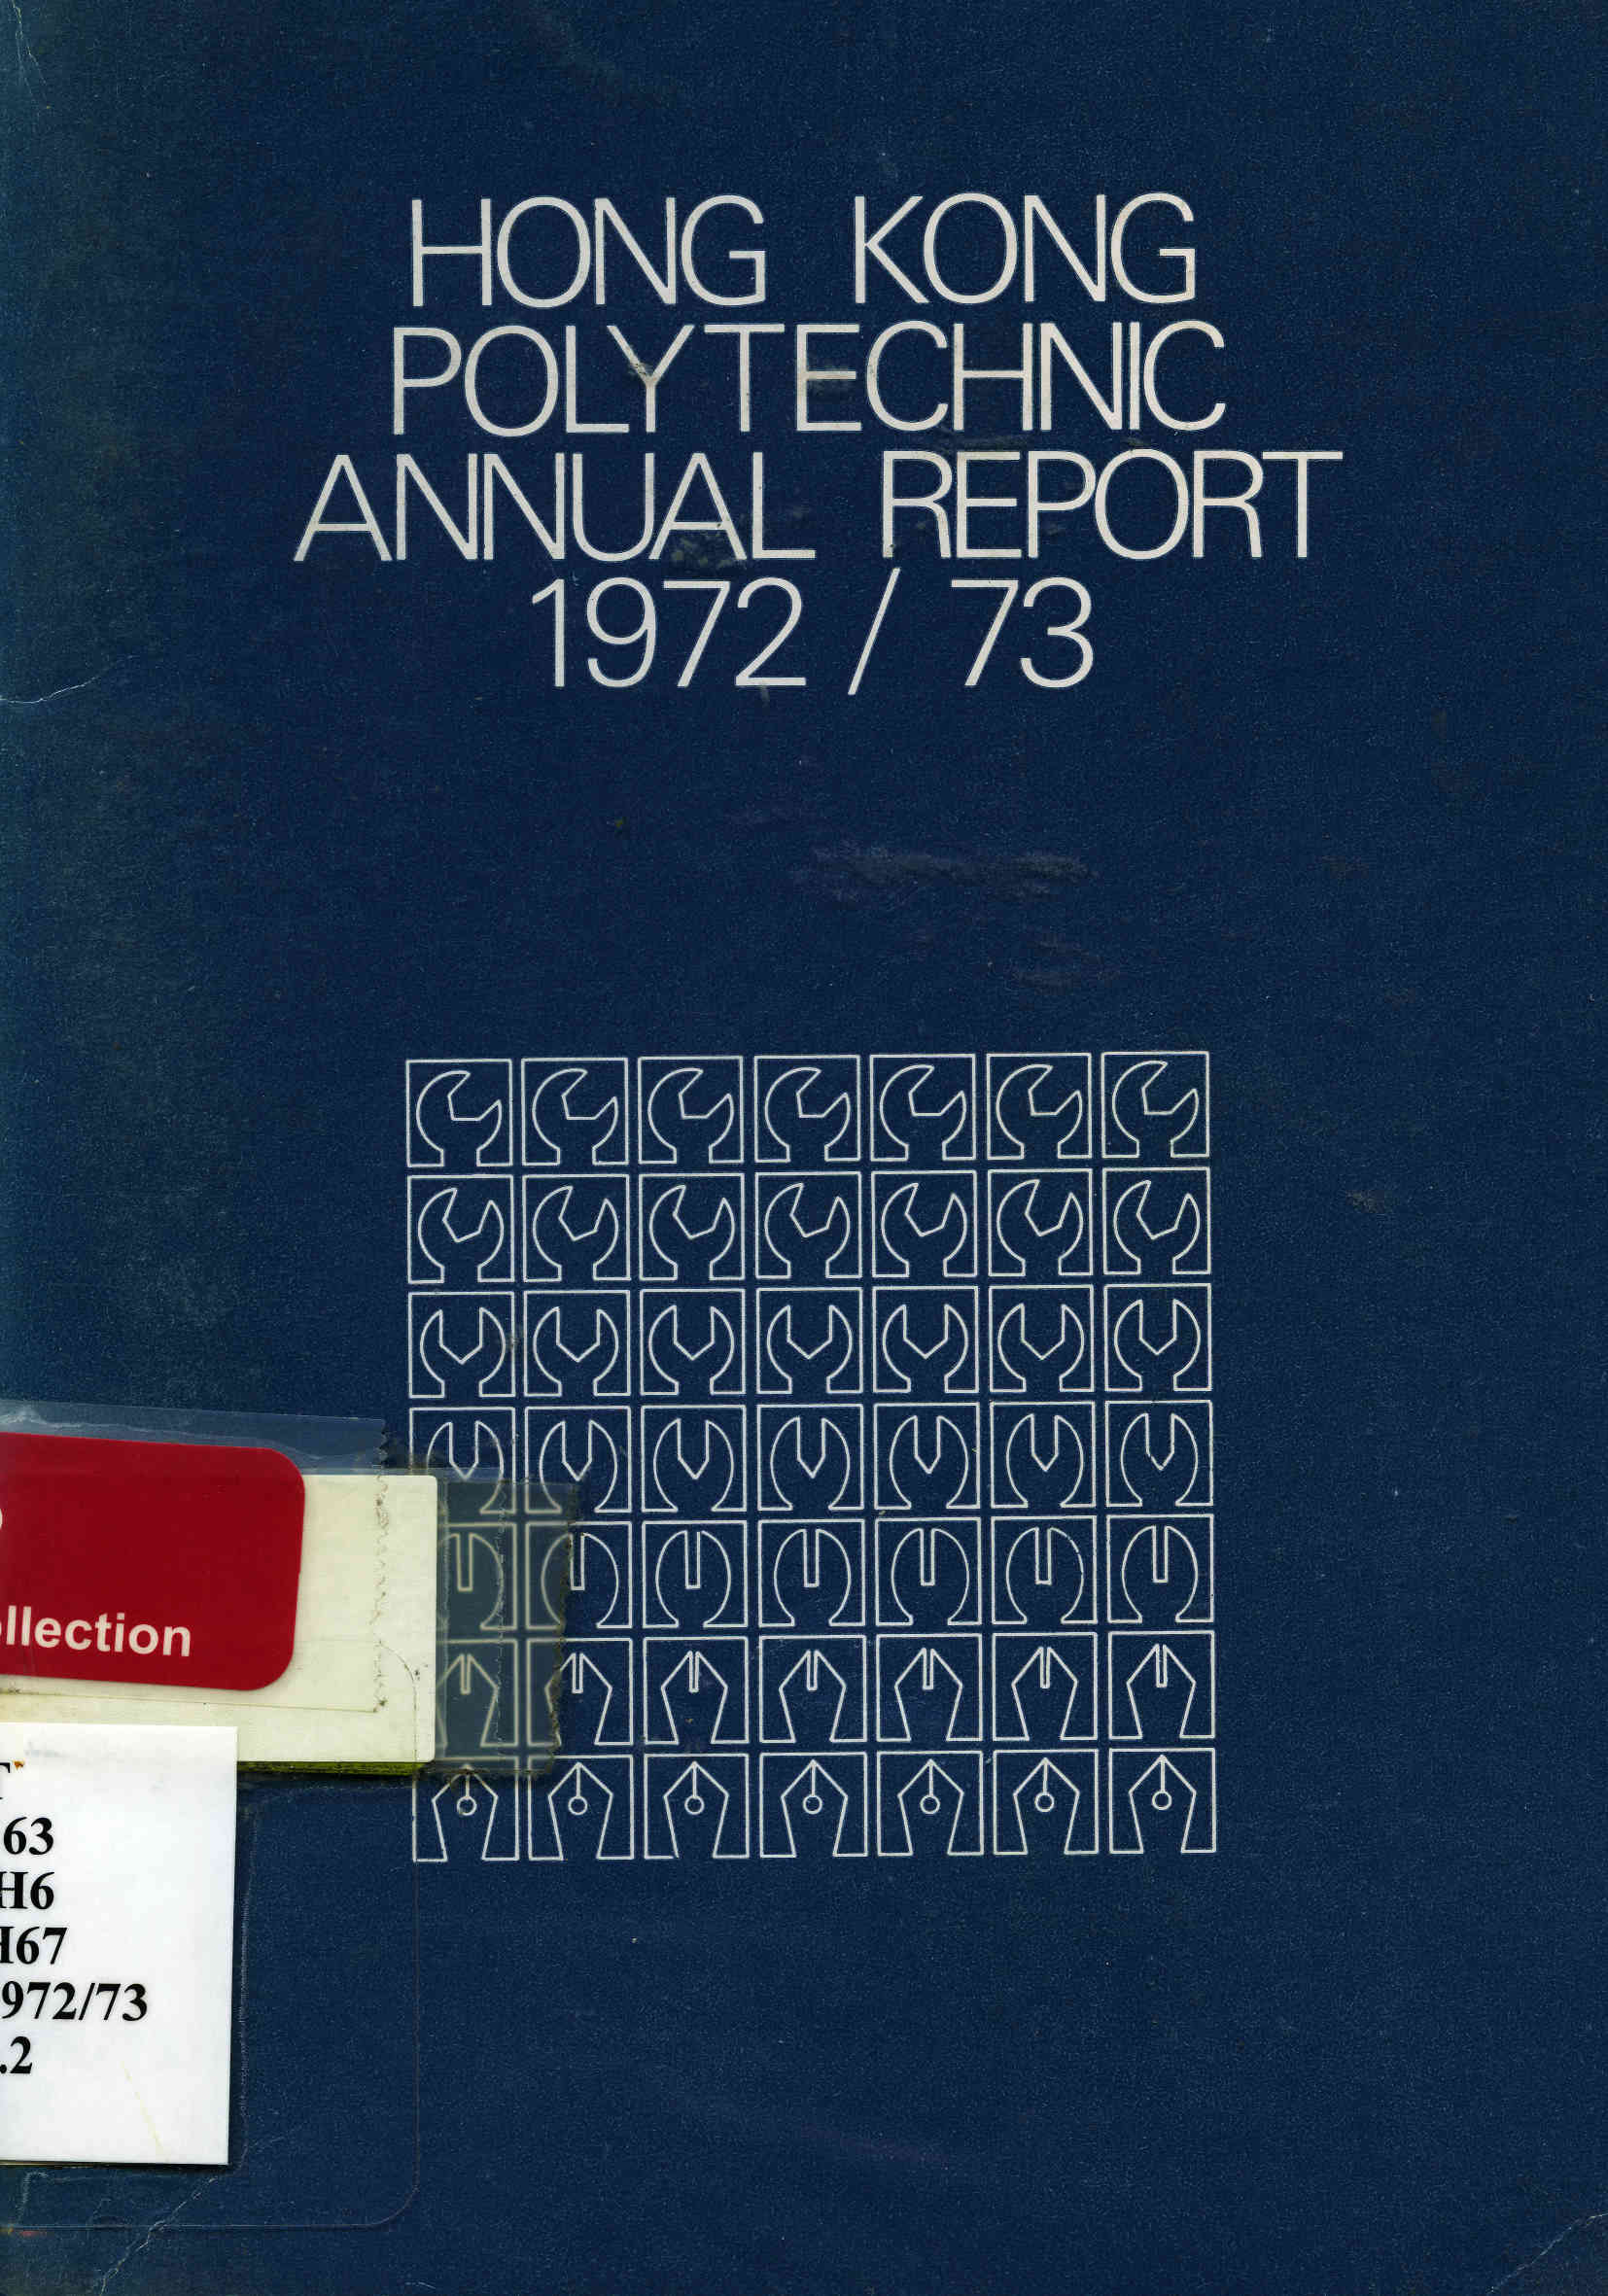 Hong Kong Polytechnic Annual Report 1972/73